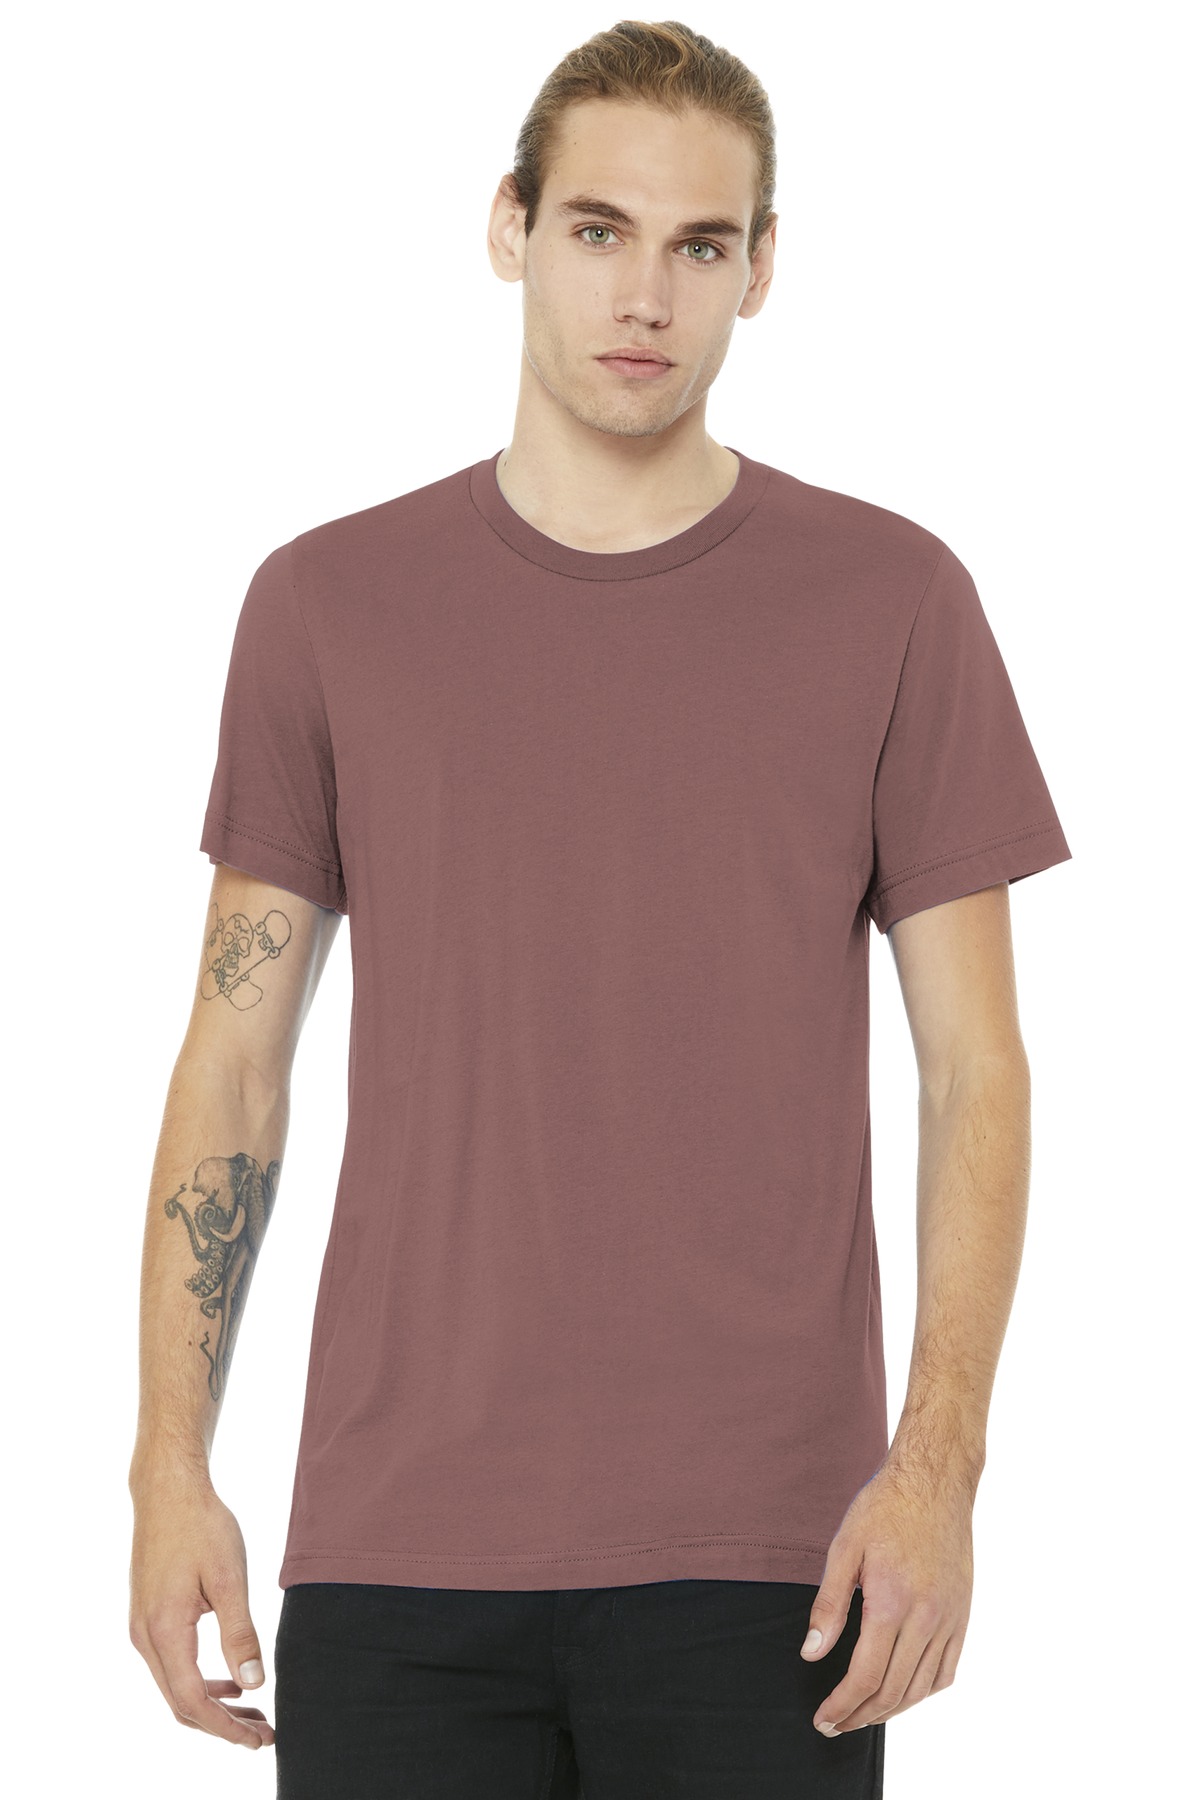 Bella + Canvas - Unisex Jersey Short-Sleeve T-Shirt-PINK-S